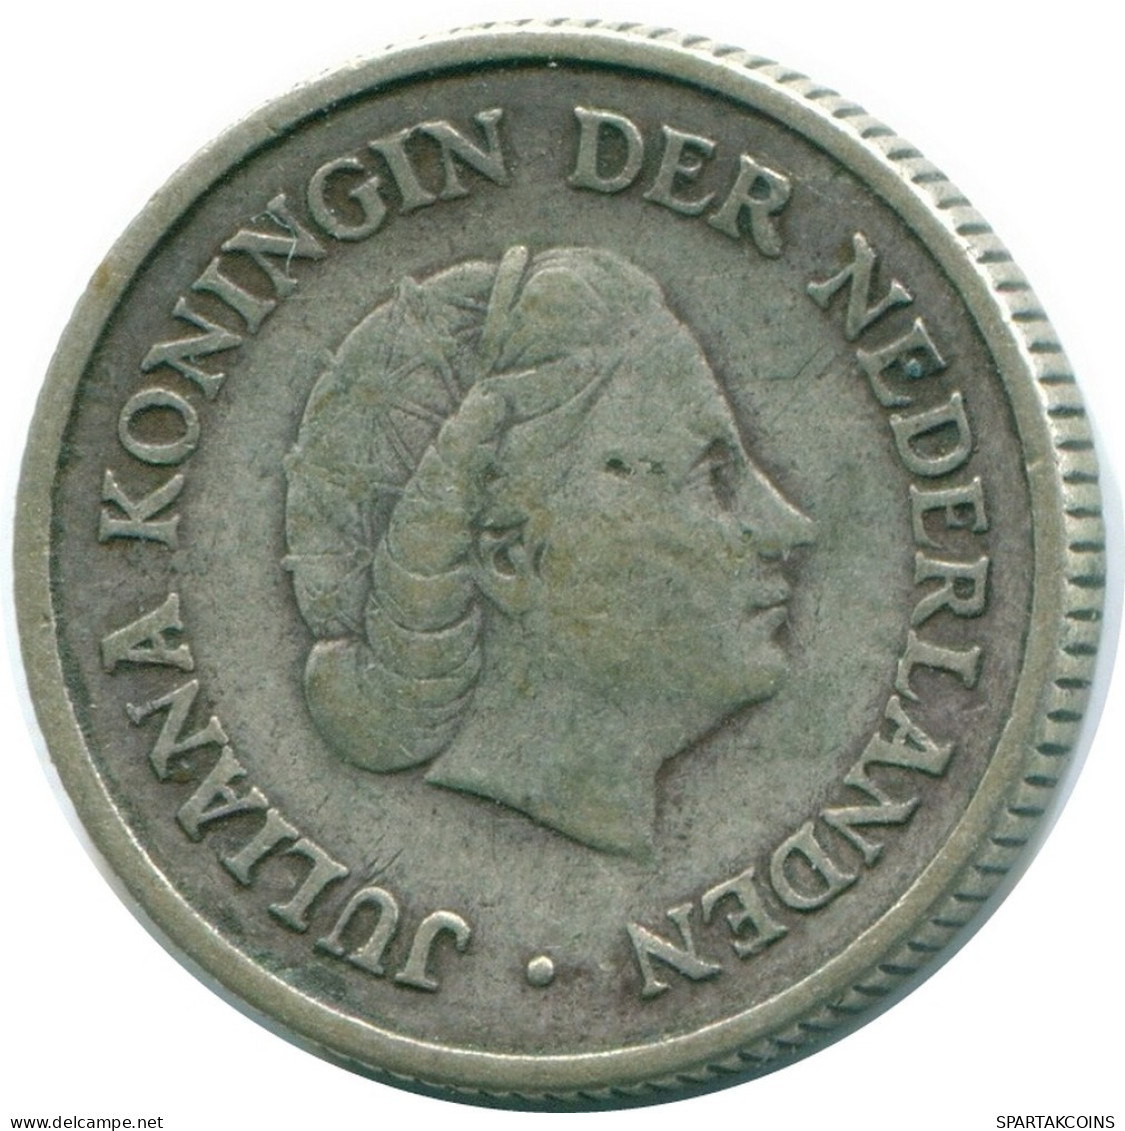 1/4 GULDEN 1954 NETHERLANDS ANTILLES SILVER Colonial Coin #NL10887.4.U.A - Antilles Néerlandaises